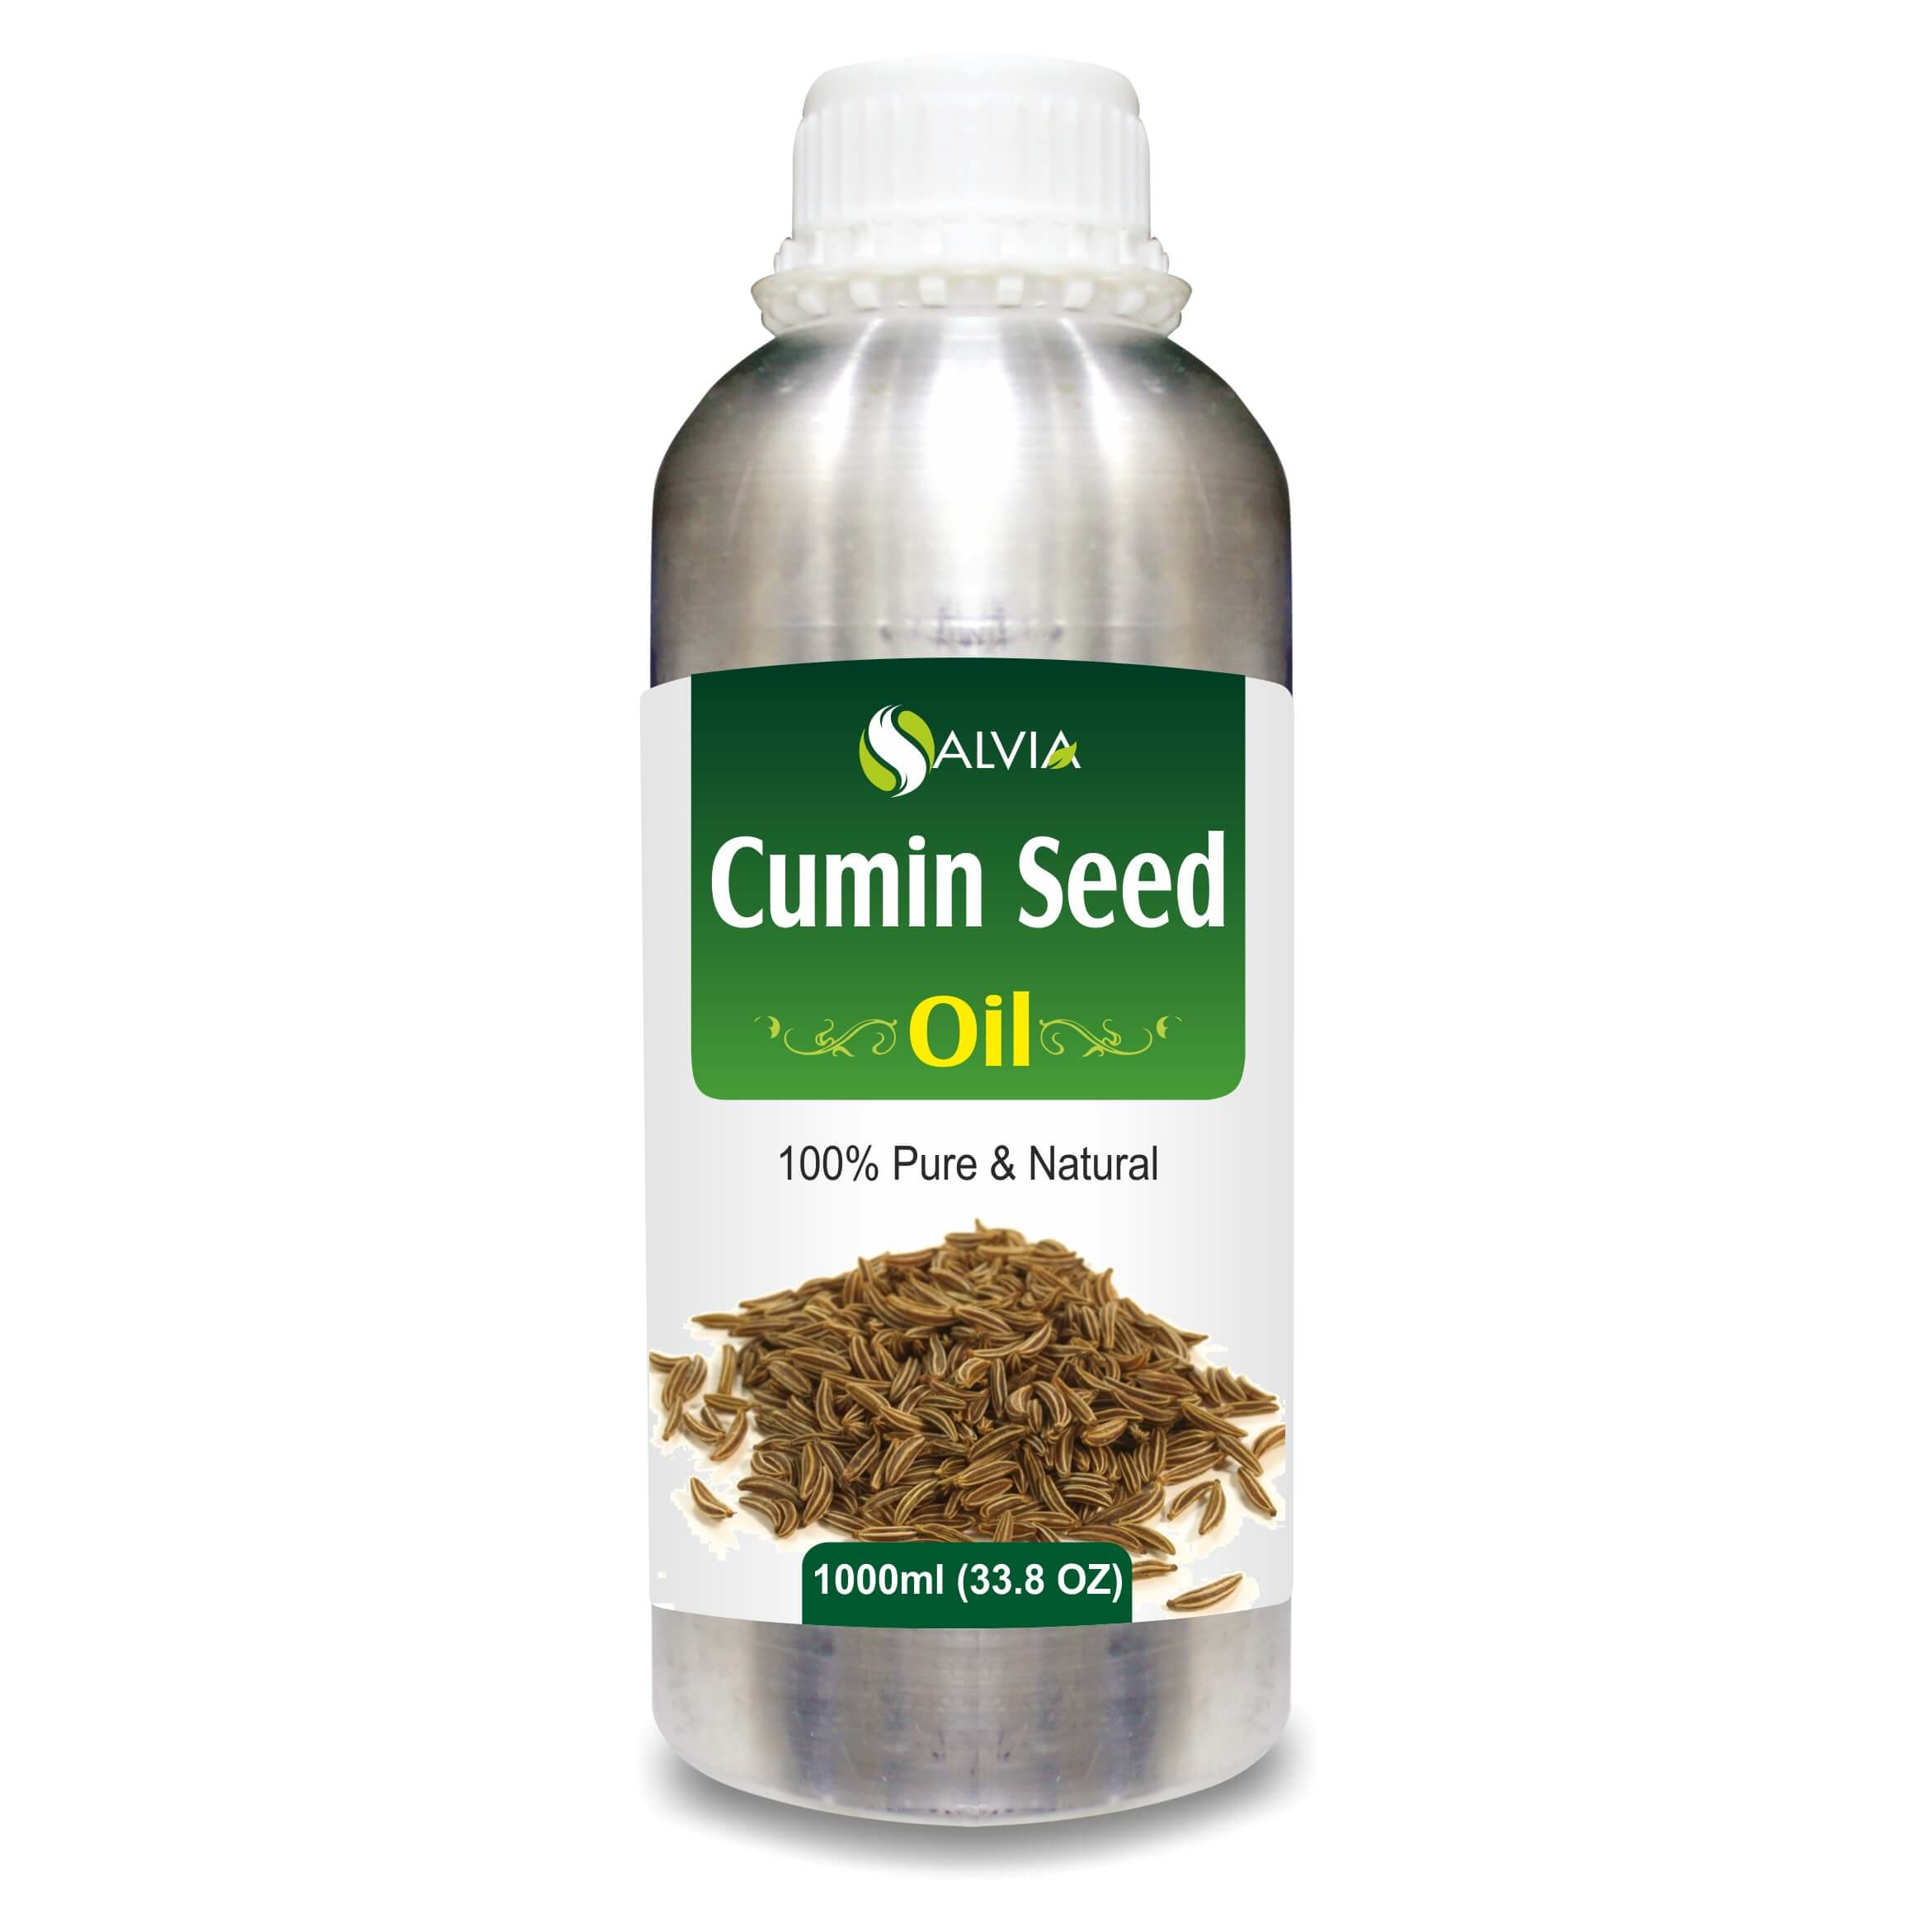 Salvia Natural Essential Oils 1000ml Cumin Seed Oil (Cuminum Cyminum) 100% Natural Pure Essential Oil